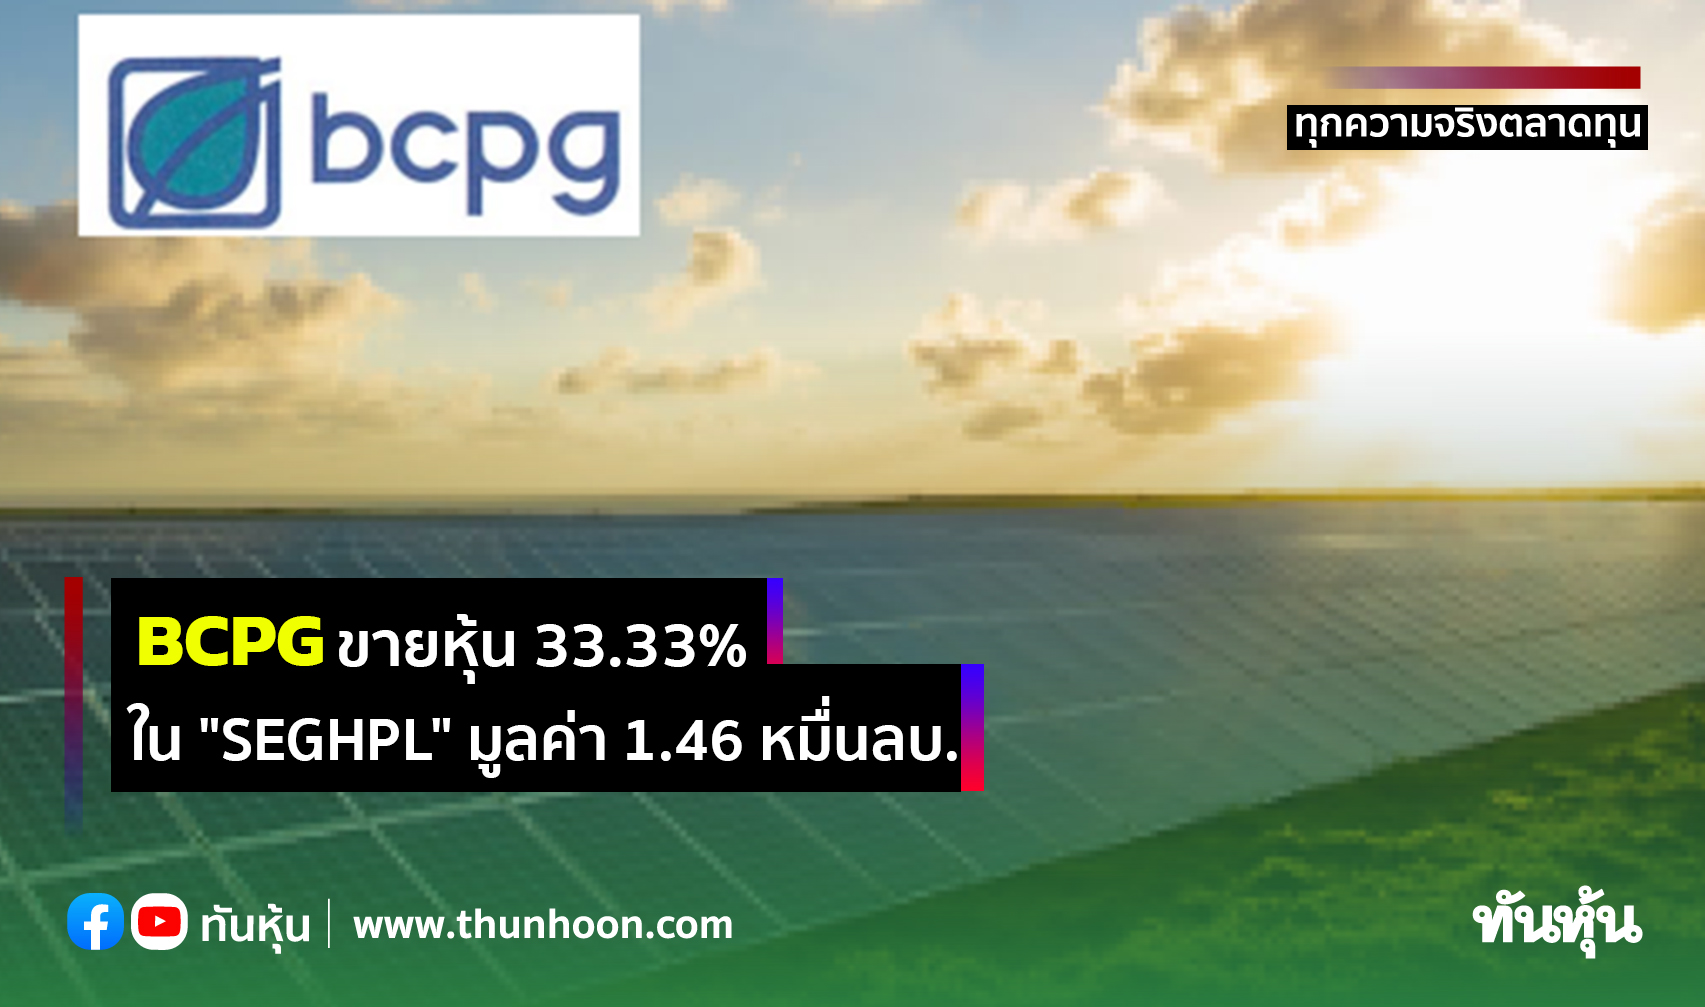 BCPG ขายหุ้น 33.33% ใน "SEGHPL" มูลค่า 1.46 หมื่นลบ.